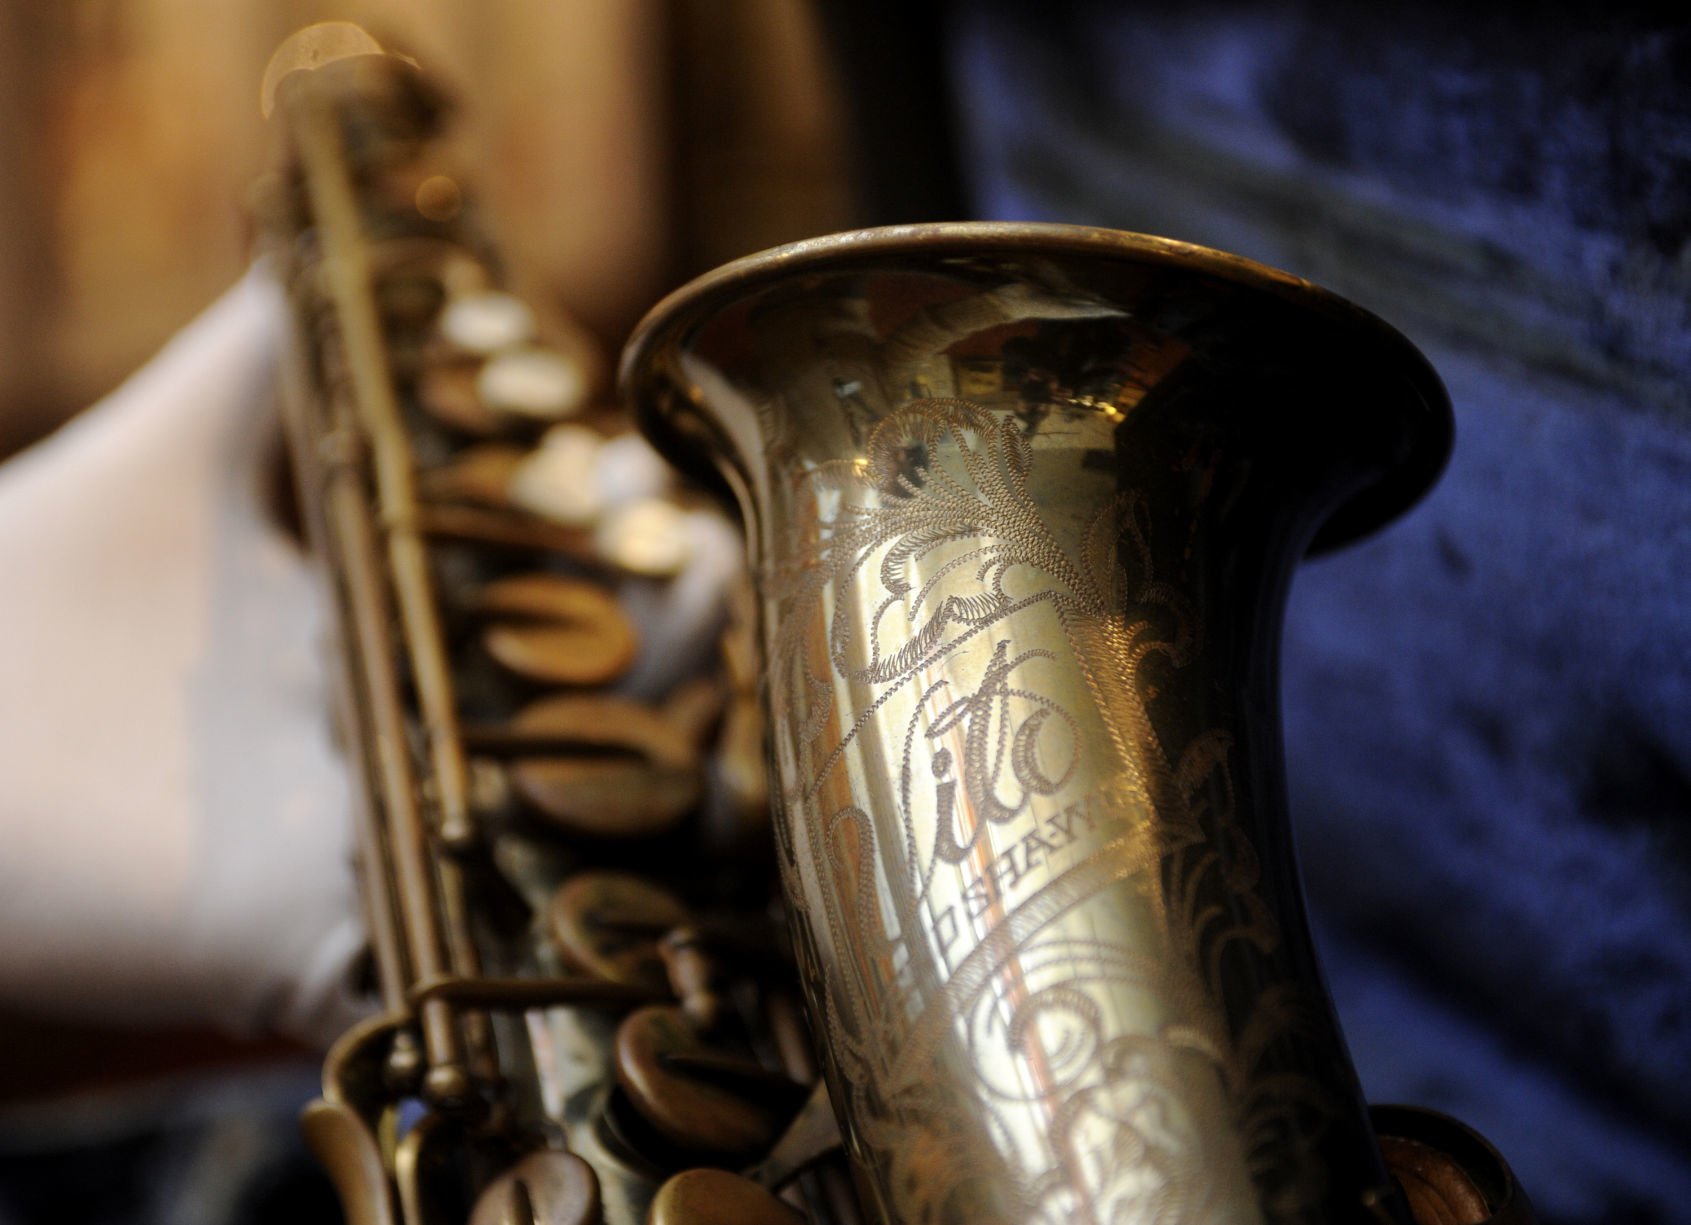 vito saxophone serial number